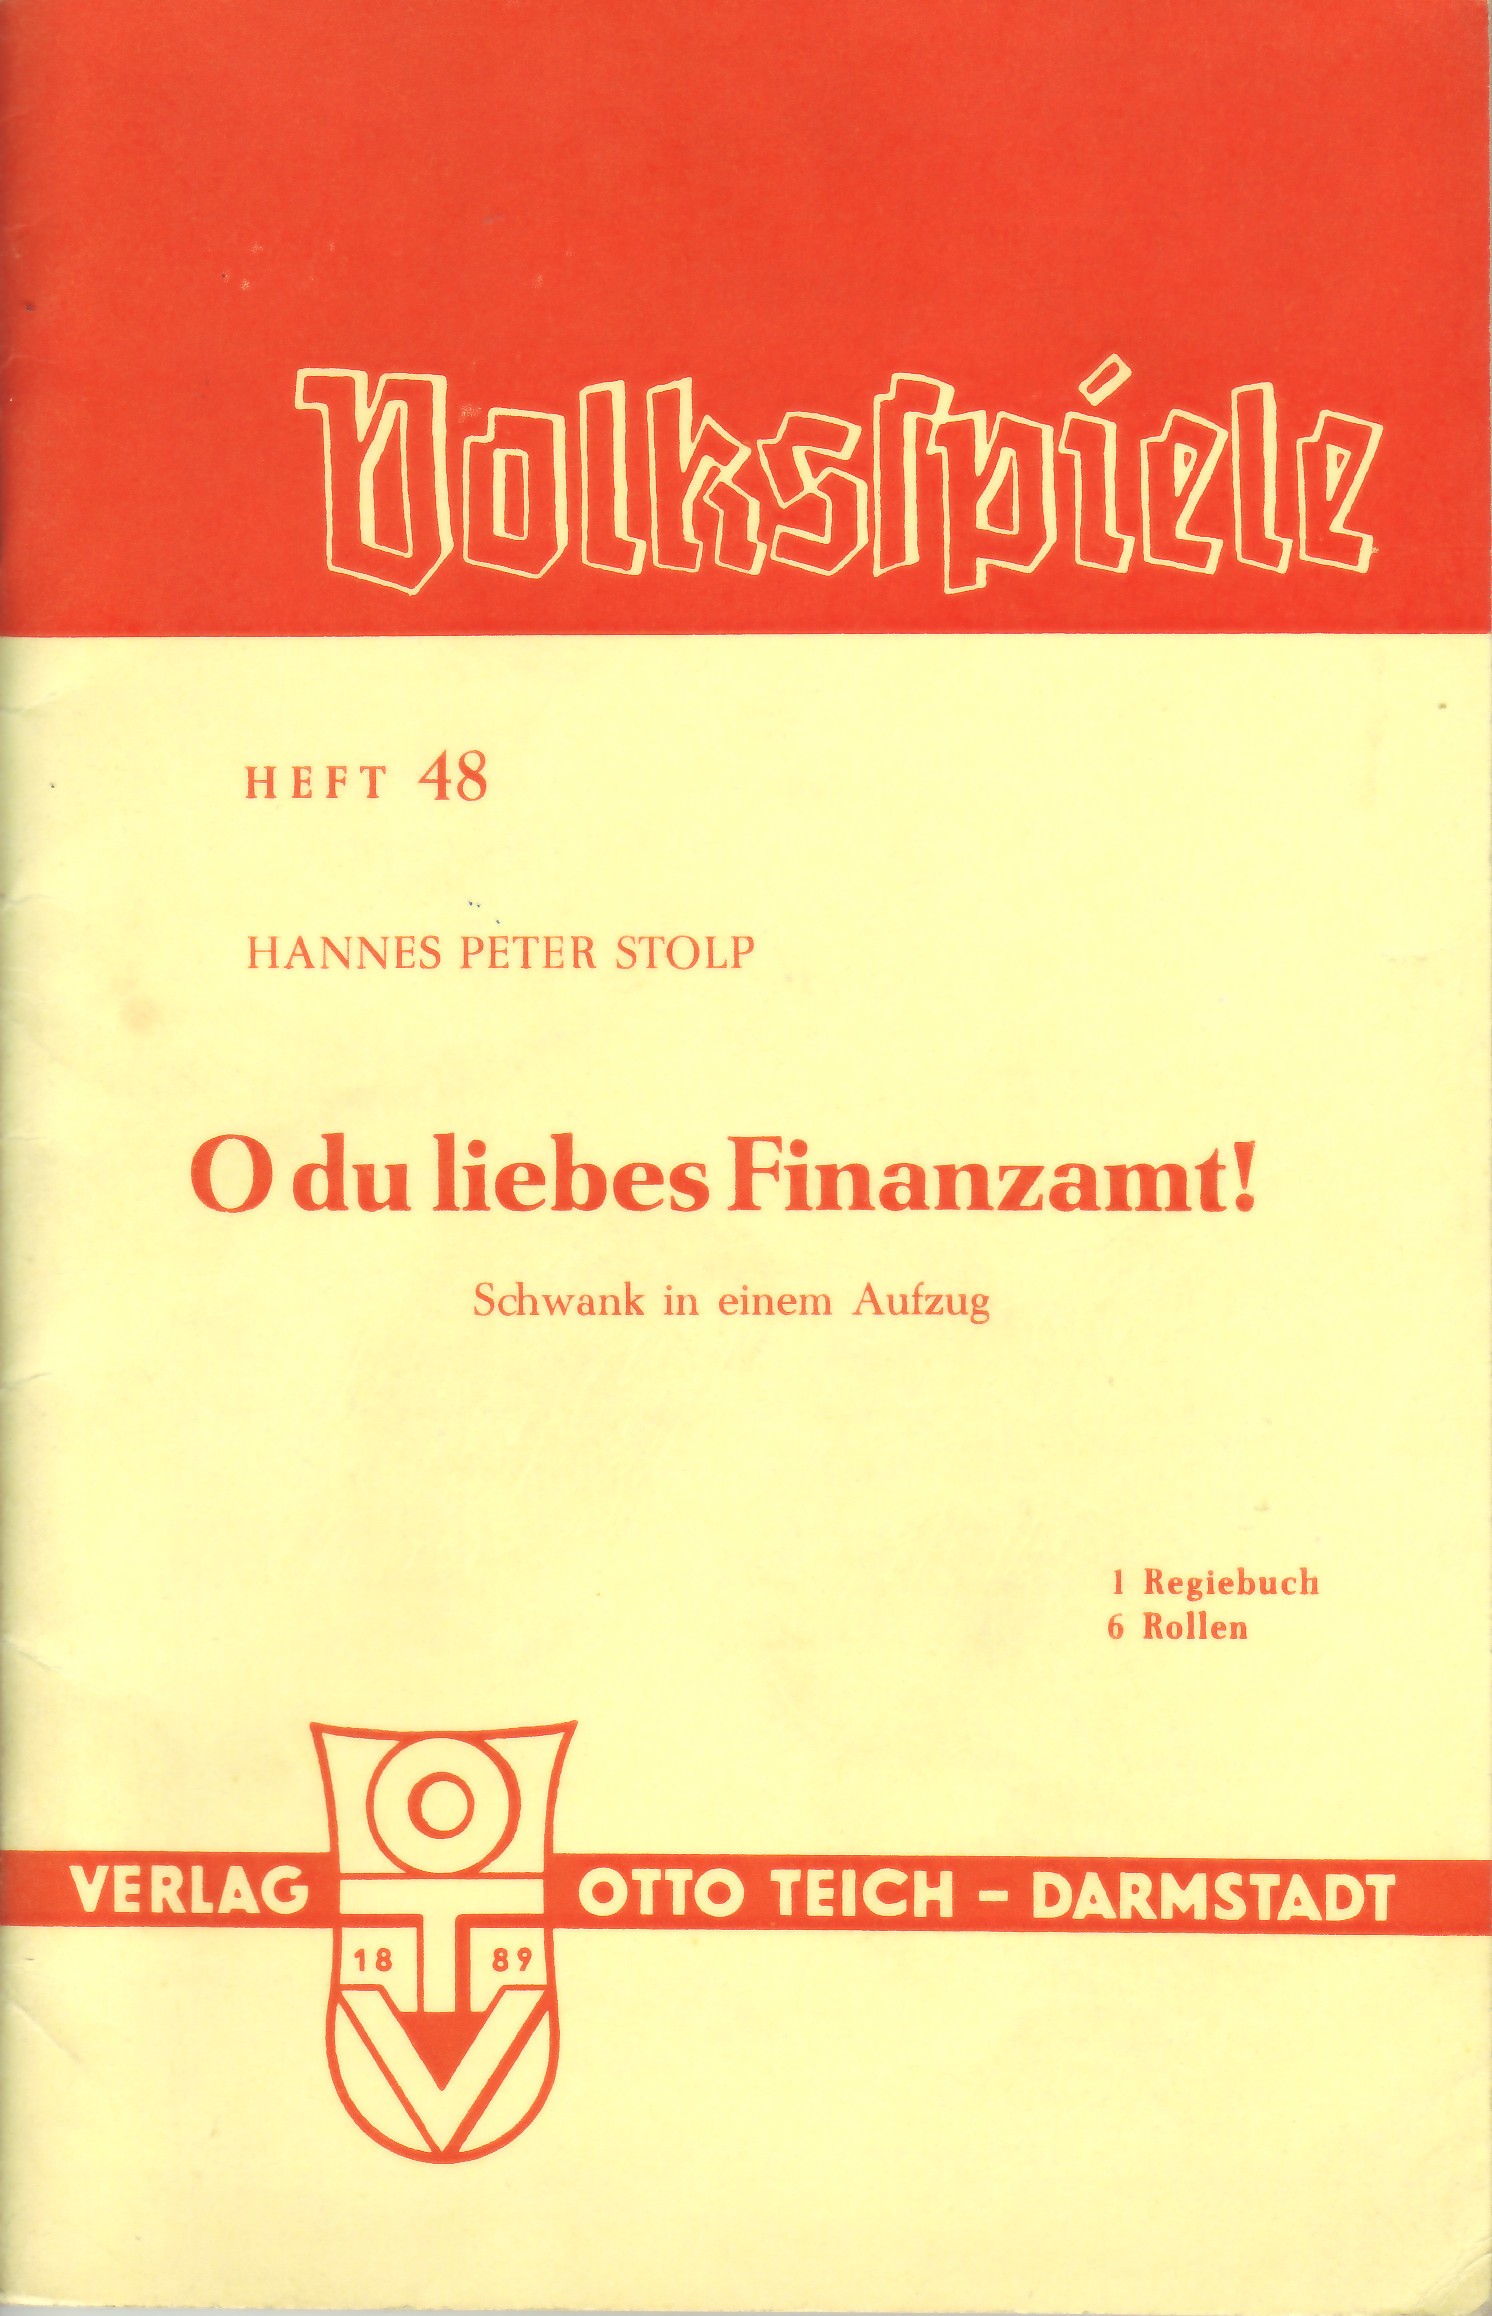 O du liebes Finanzamt (Kulturverein Guntersblum CC BY-NC-SA)